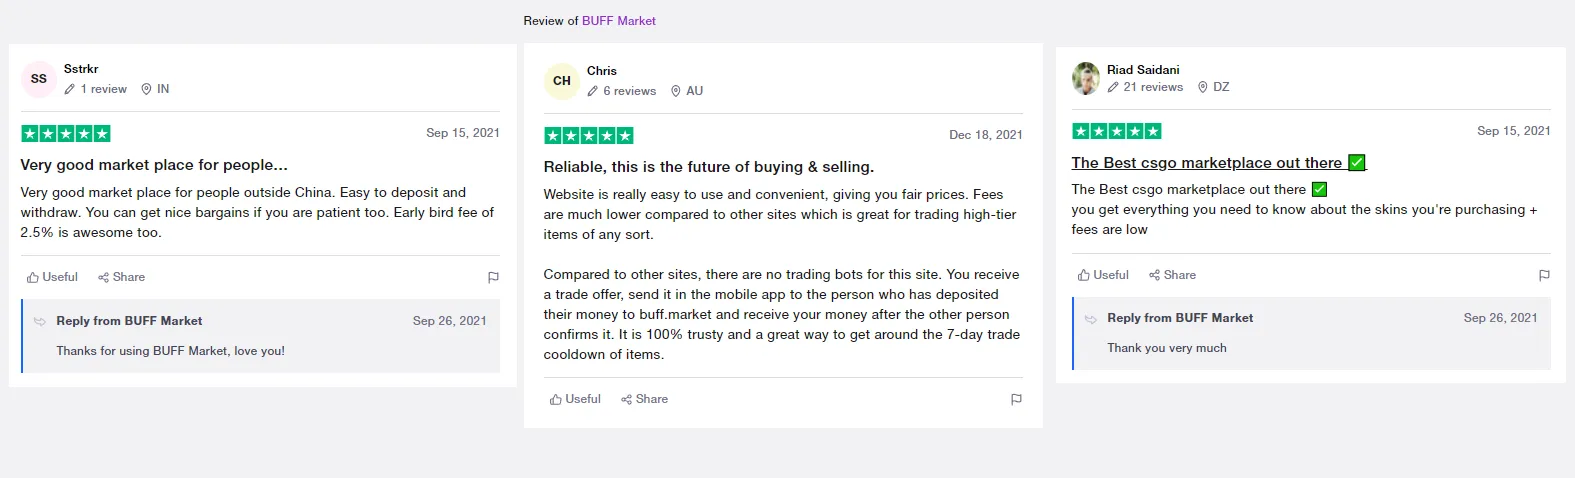 BUFF Market Reputation